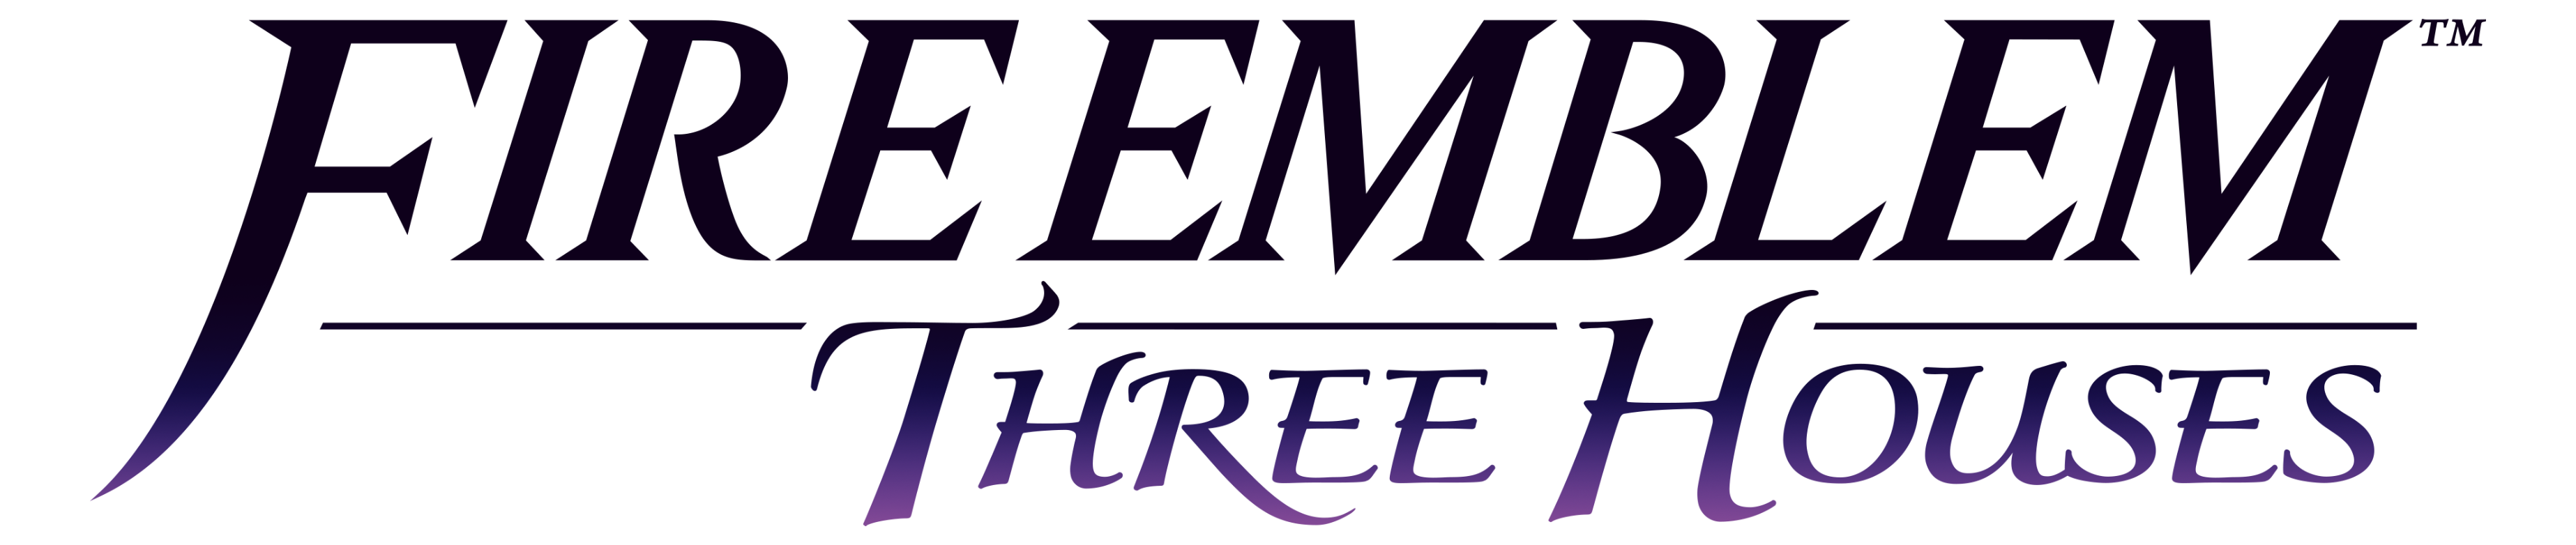 Image result for fire emblem three houses logo